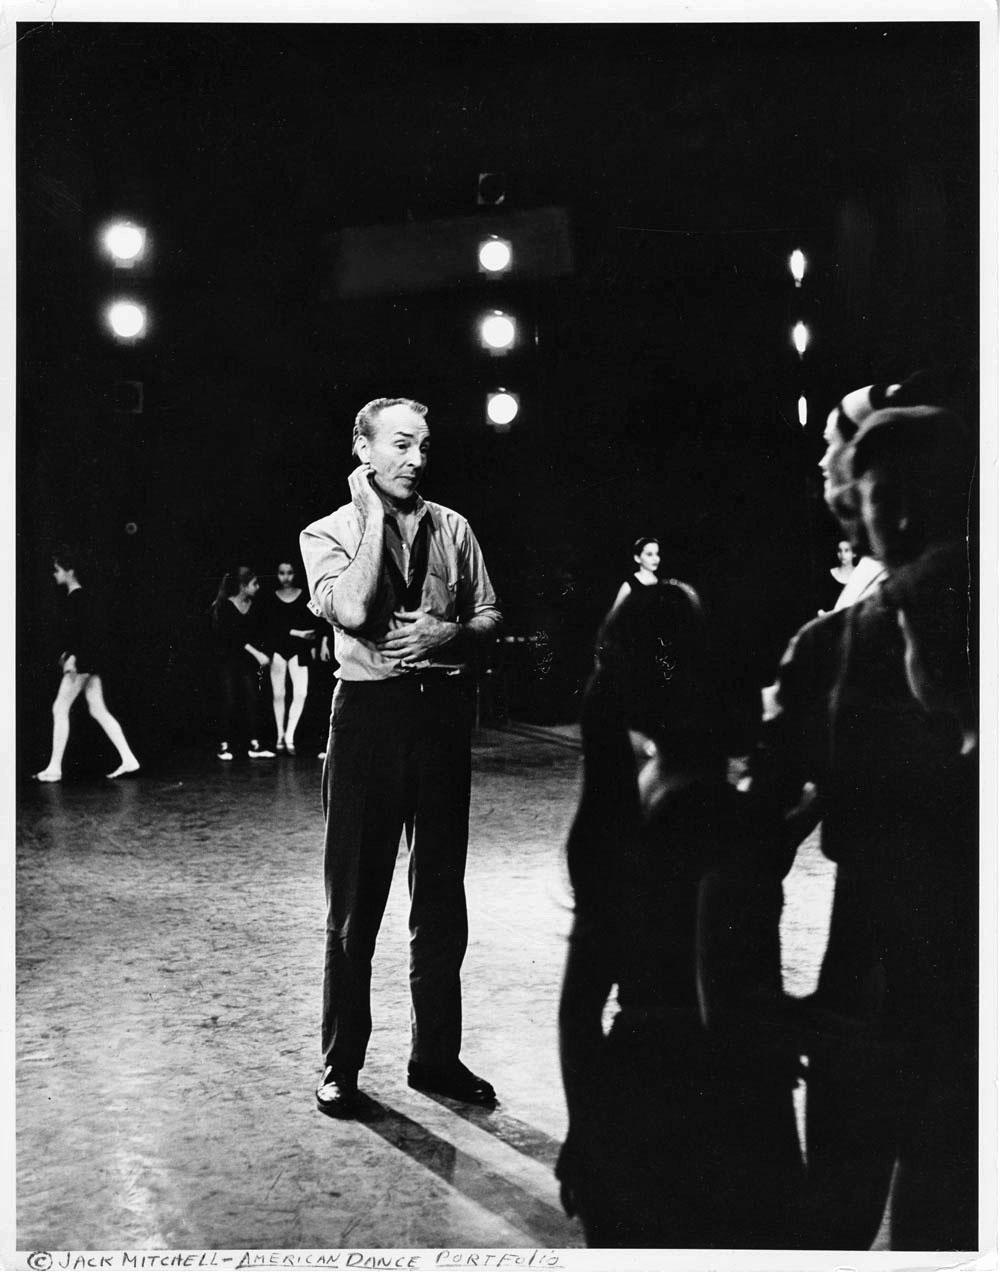 Jack Mitchell Black and White Photograph - Choreographer George Balanchine rehearsing NYCB's  "Midsummer Nights Dream"